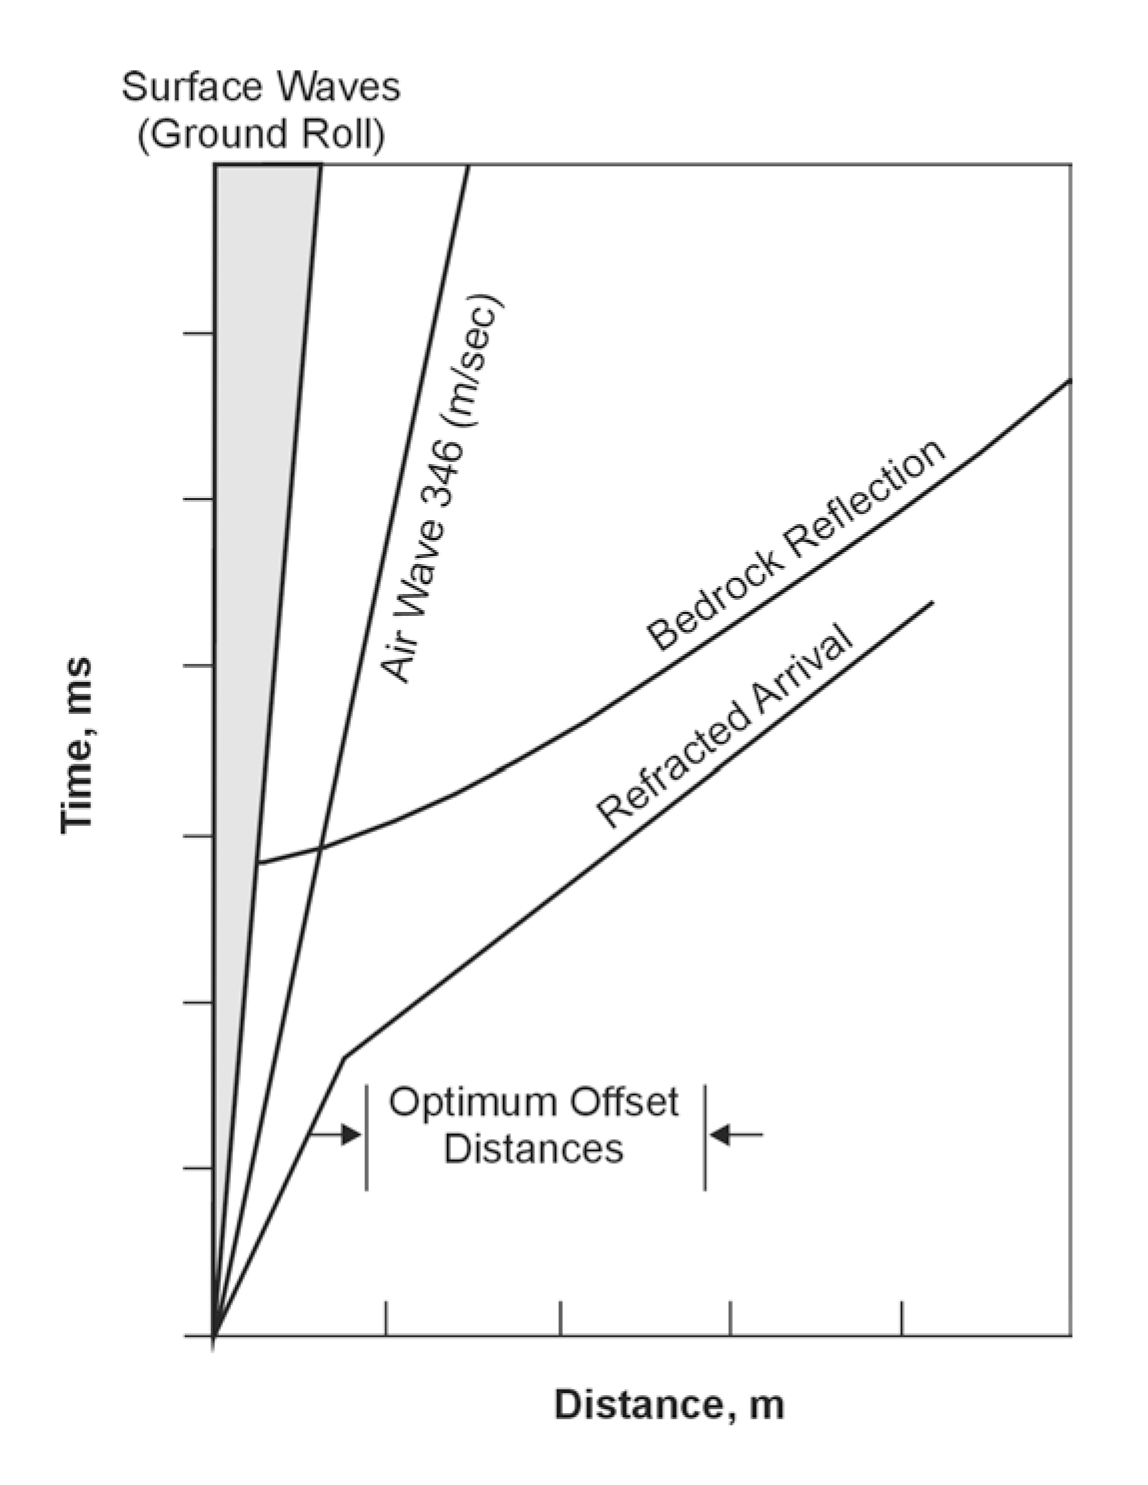 Optimum offset distance determination for the common offset method.